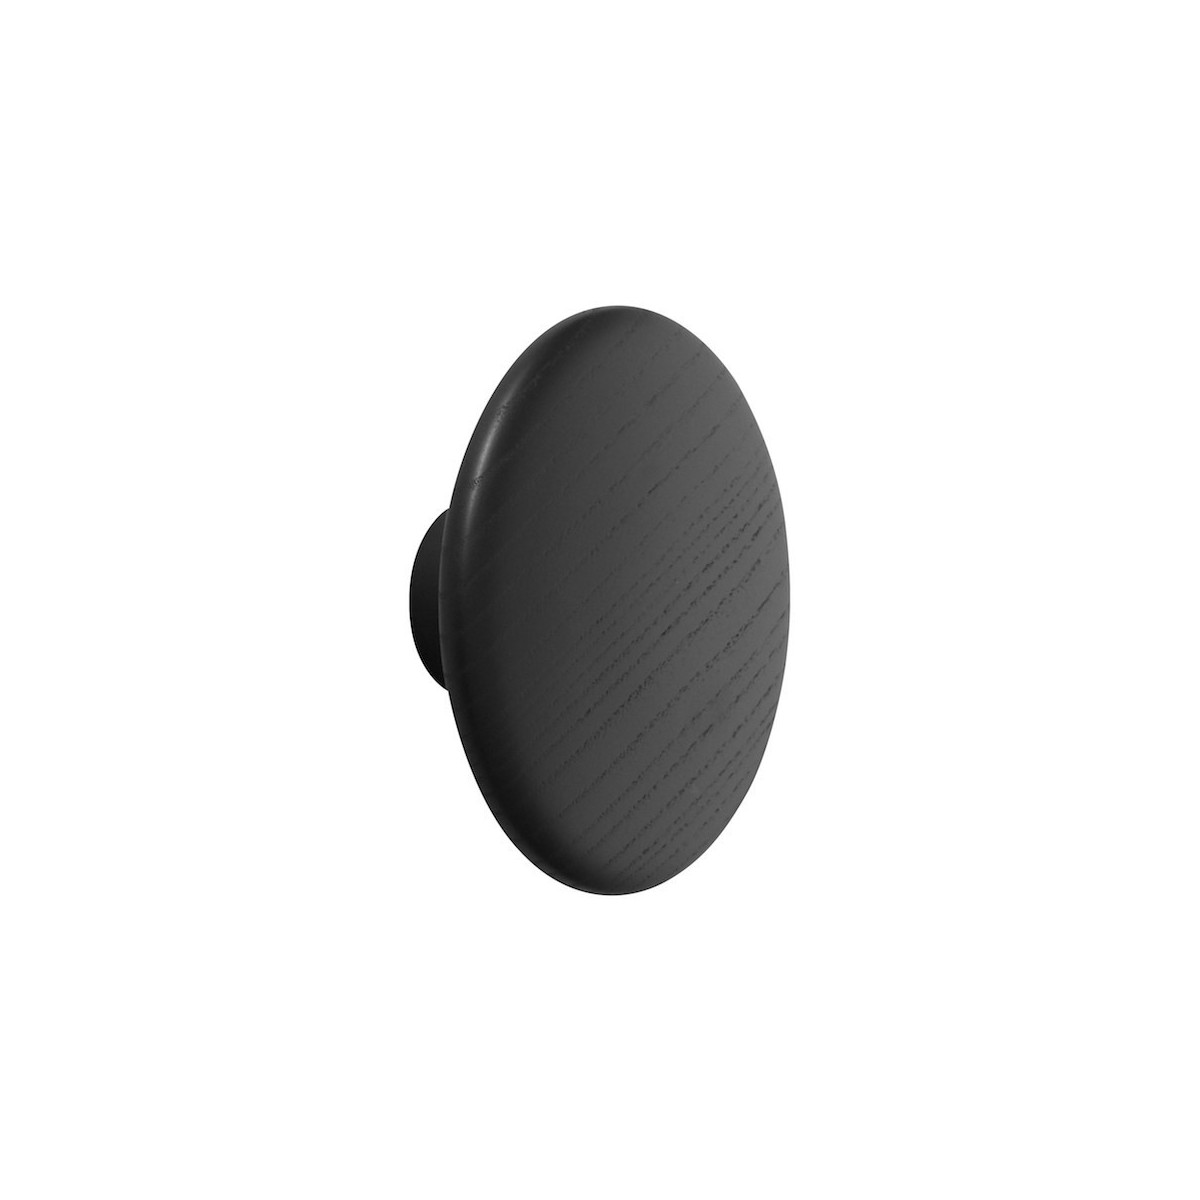 Ø13 cm (M) - black - The Dots wood